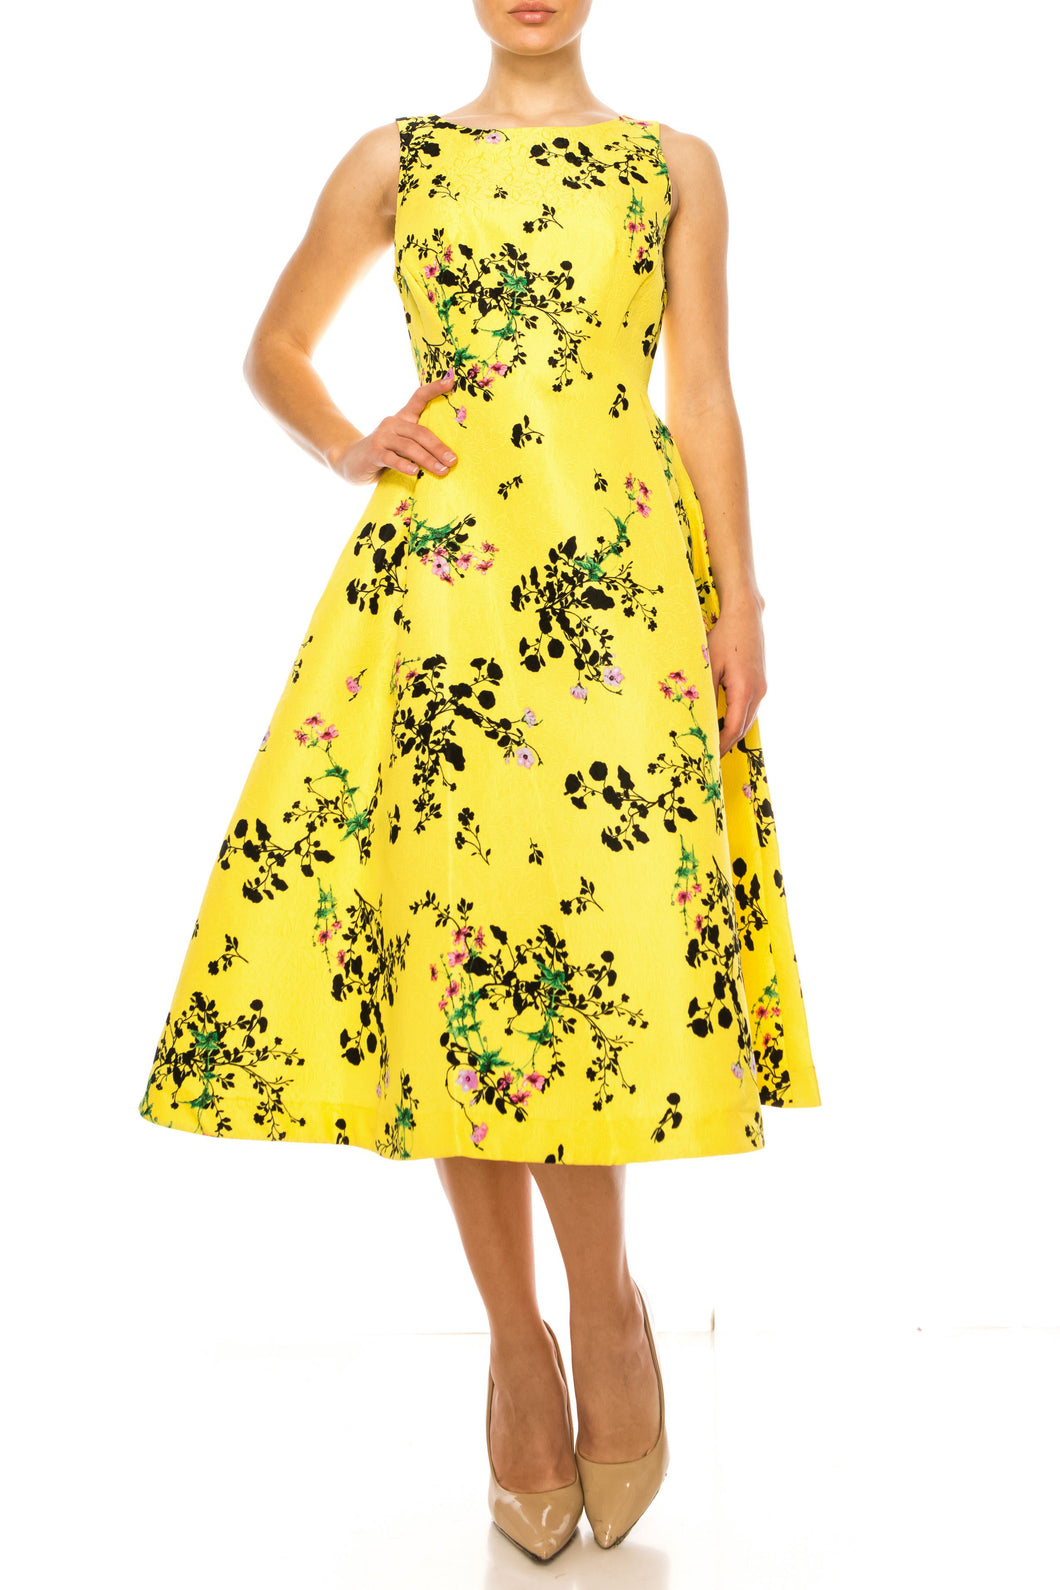 Maison Tara Lemon Bouffant Day Dress Size 6 Remaining! Women's Apparel Classic Attire